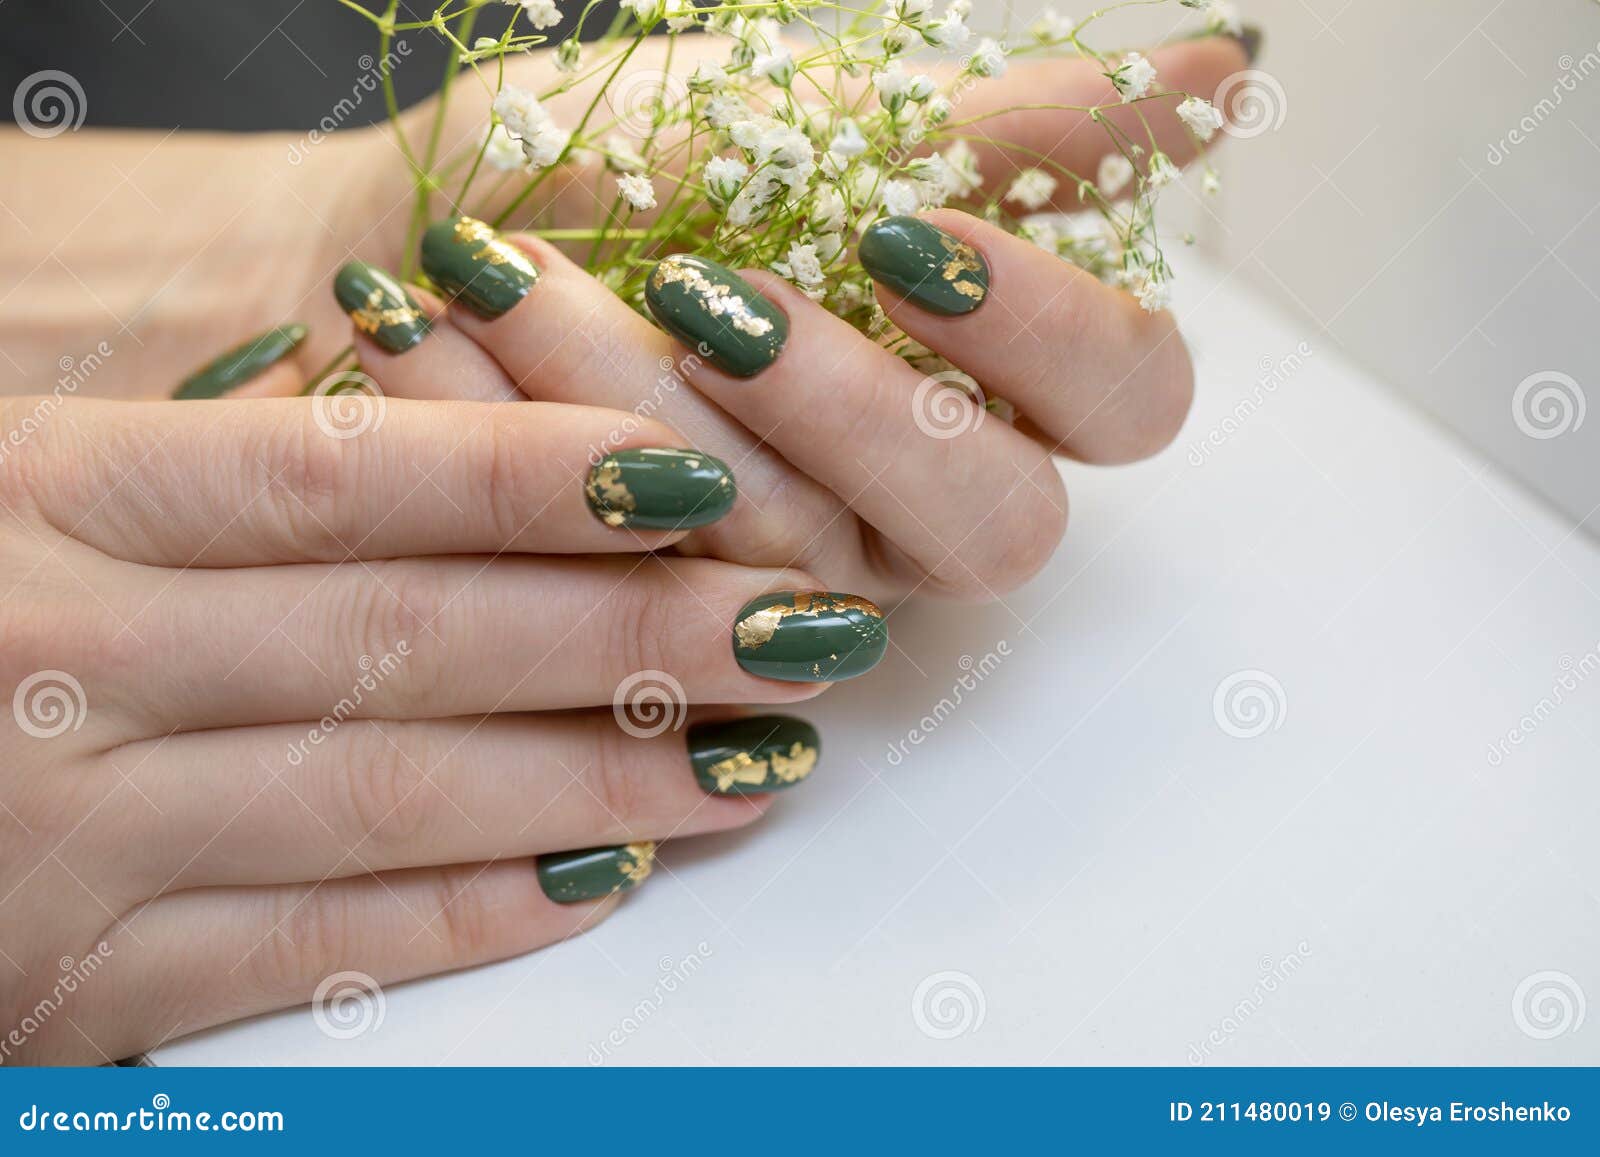 Latest manicure obsession: Logo nail art - StyleSpeak